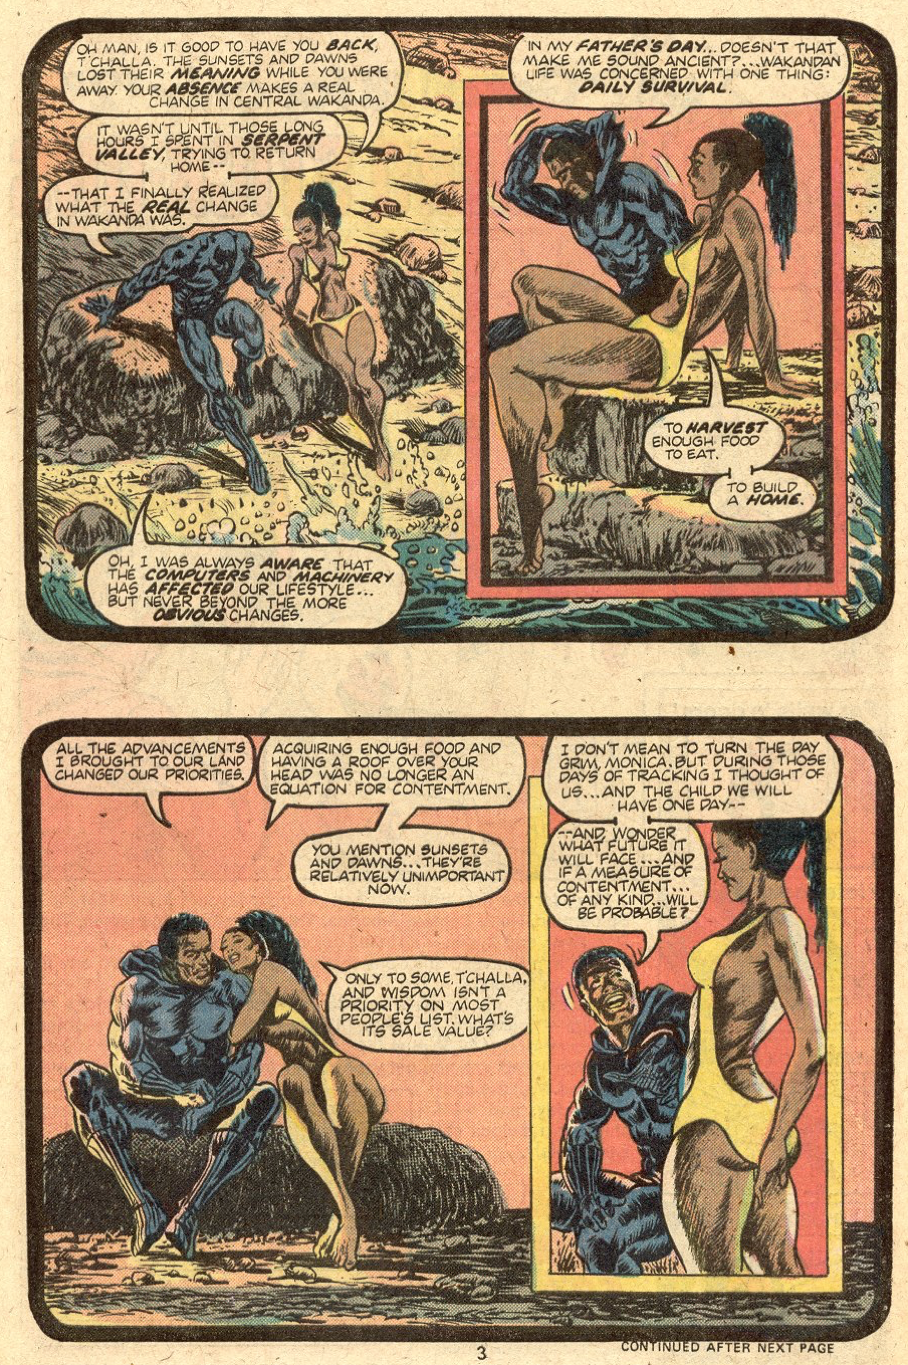 The Politics Of Marvel’s Black Panther